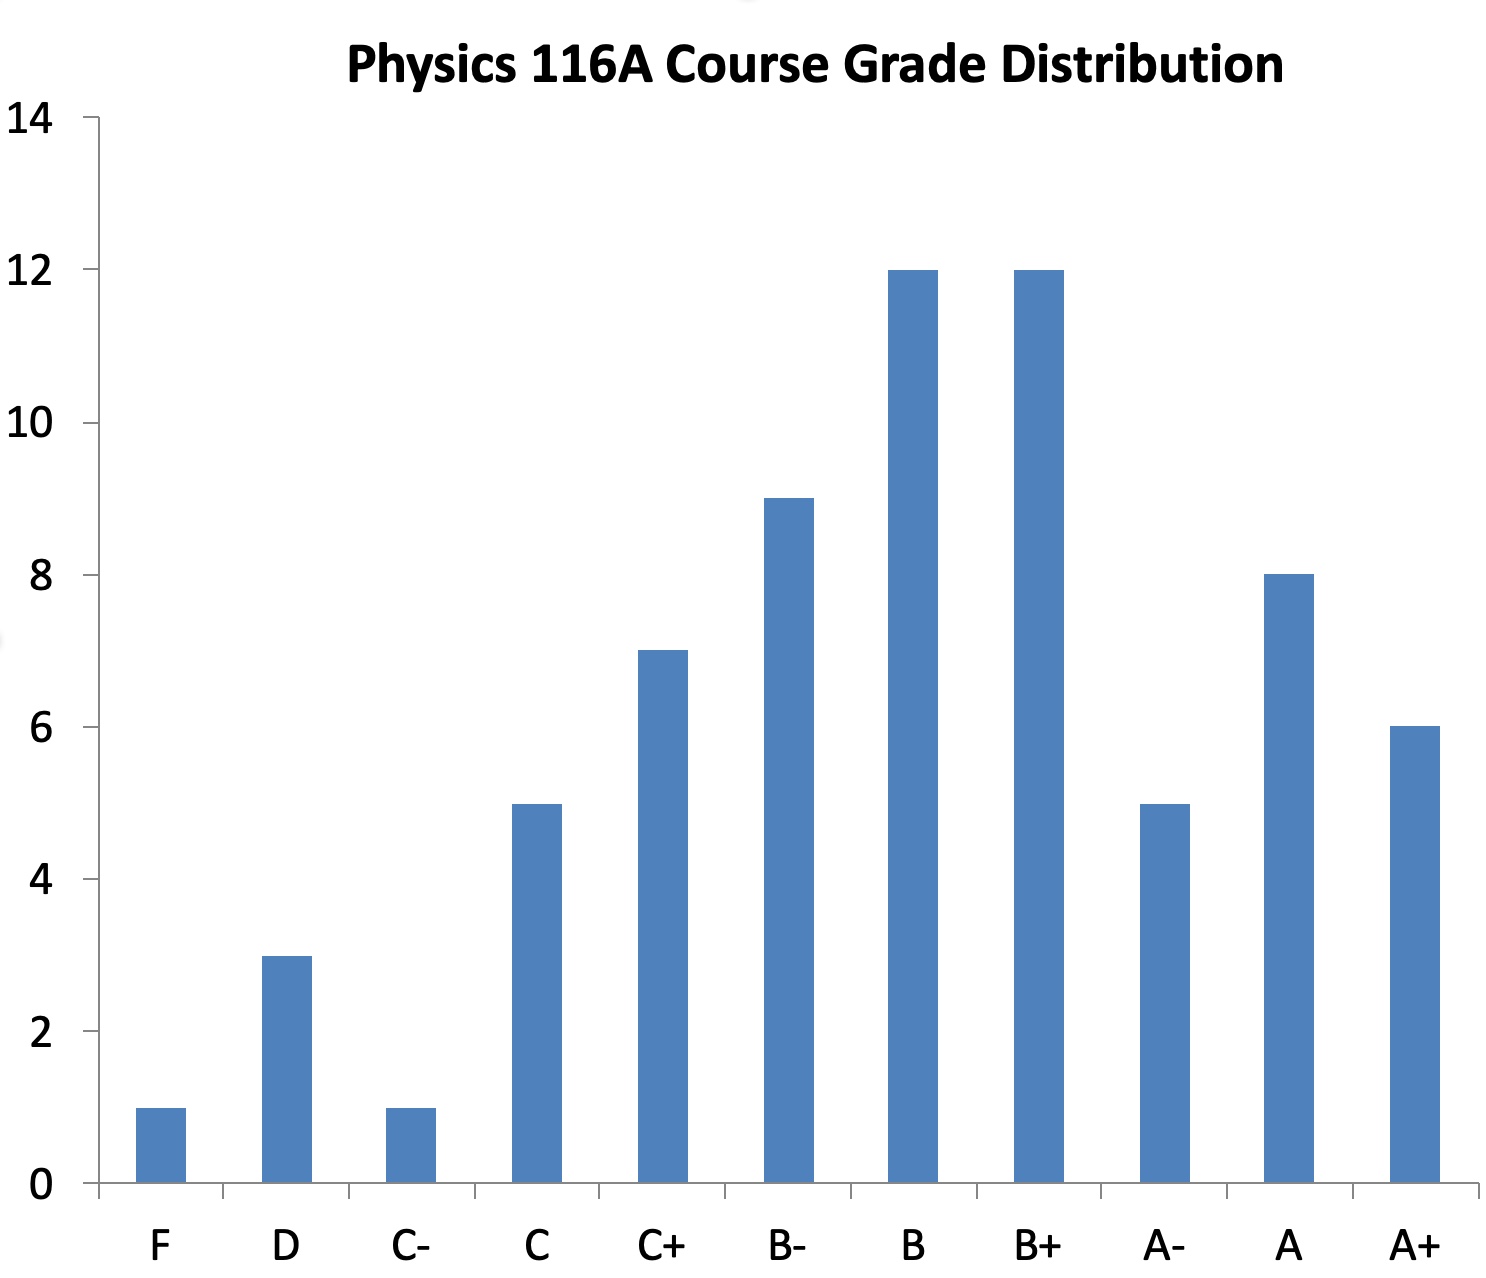 distribution of final exam scores